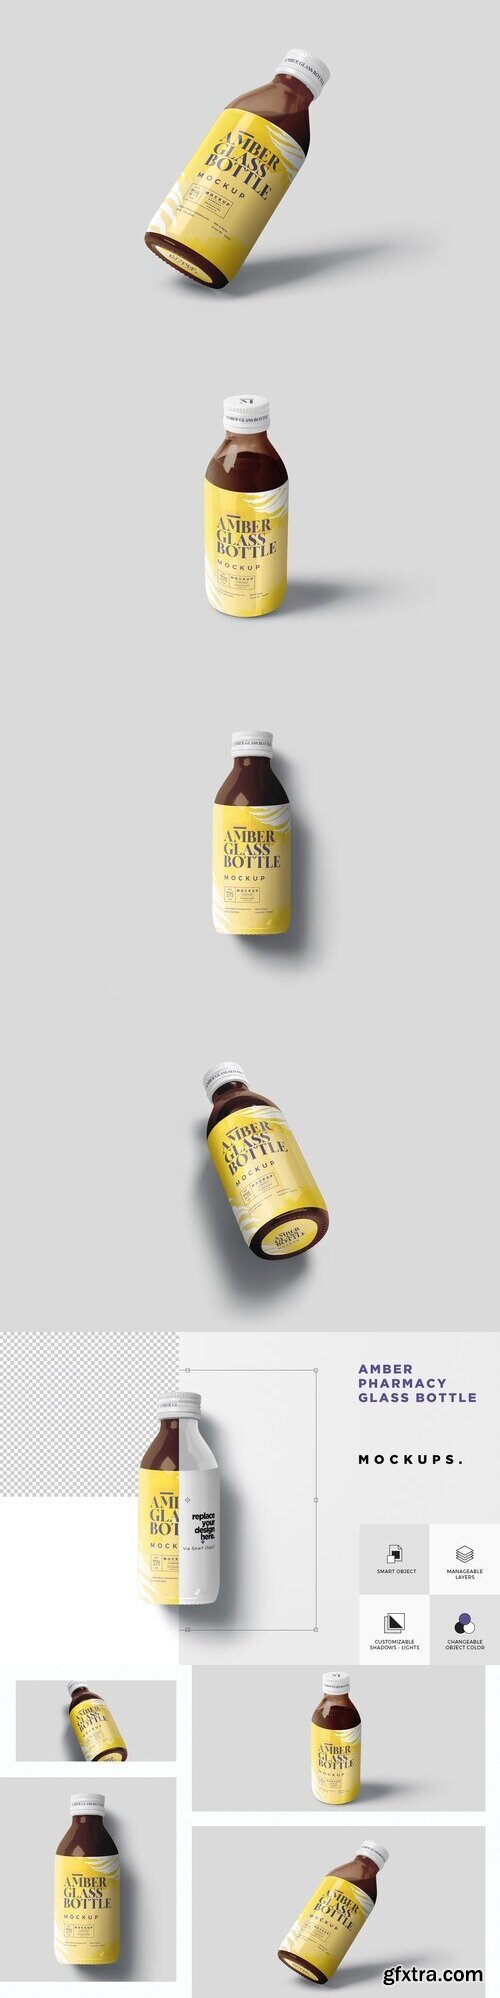 CreativeMarket - Amber Glass Syrup Bottle Mockups 7540196